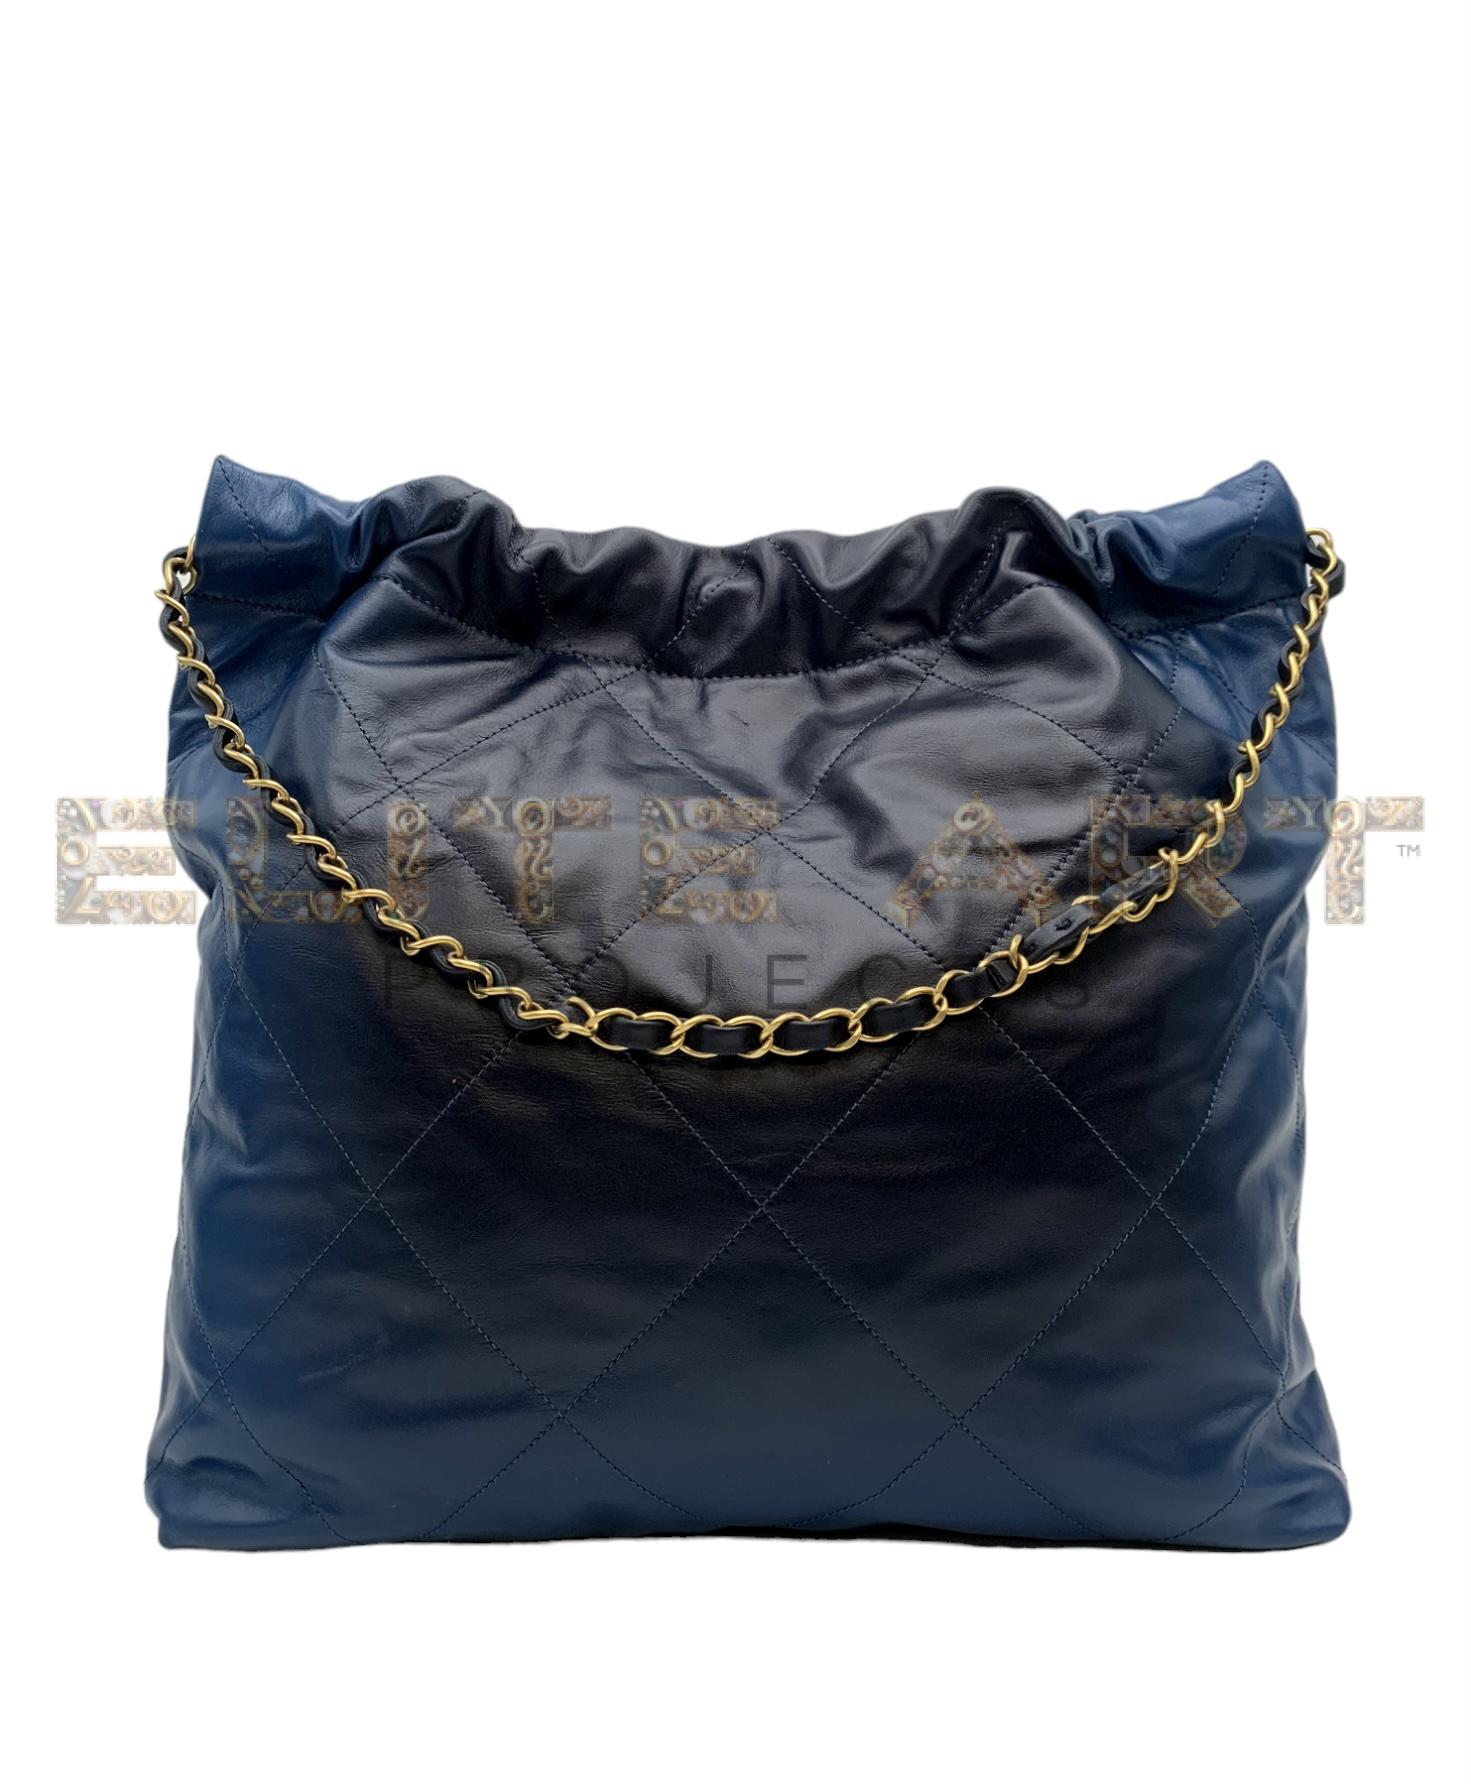 22 Handbag, quilted leather, blue gradient, gold inserts, elegance